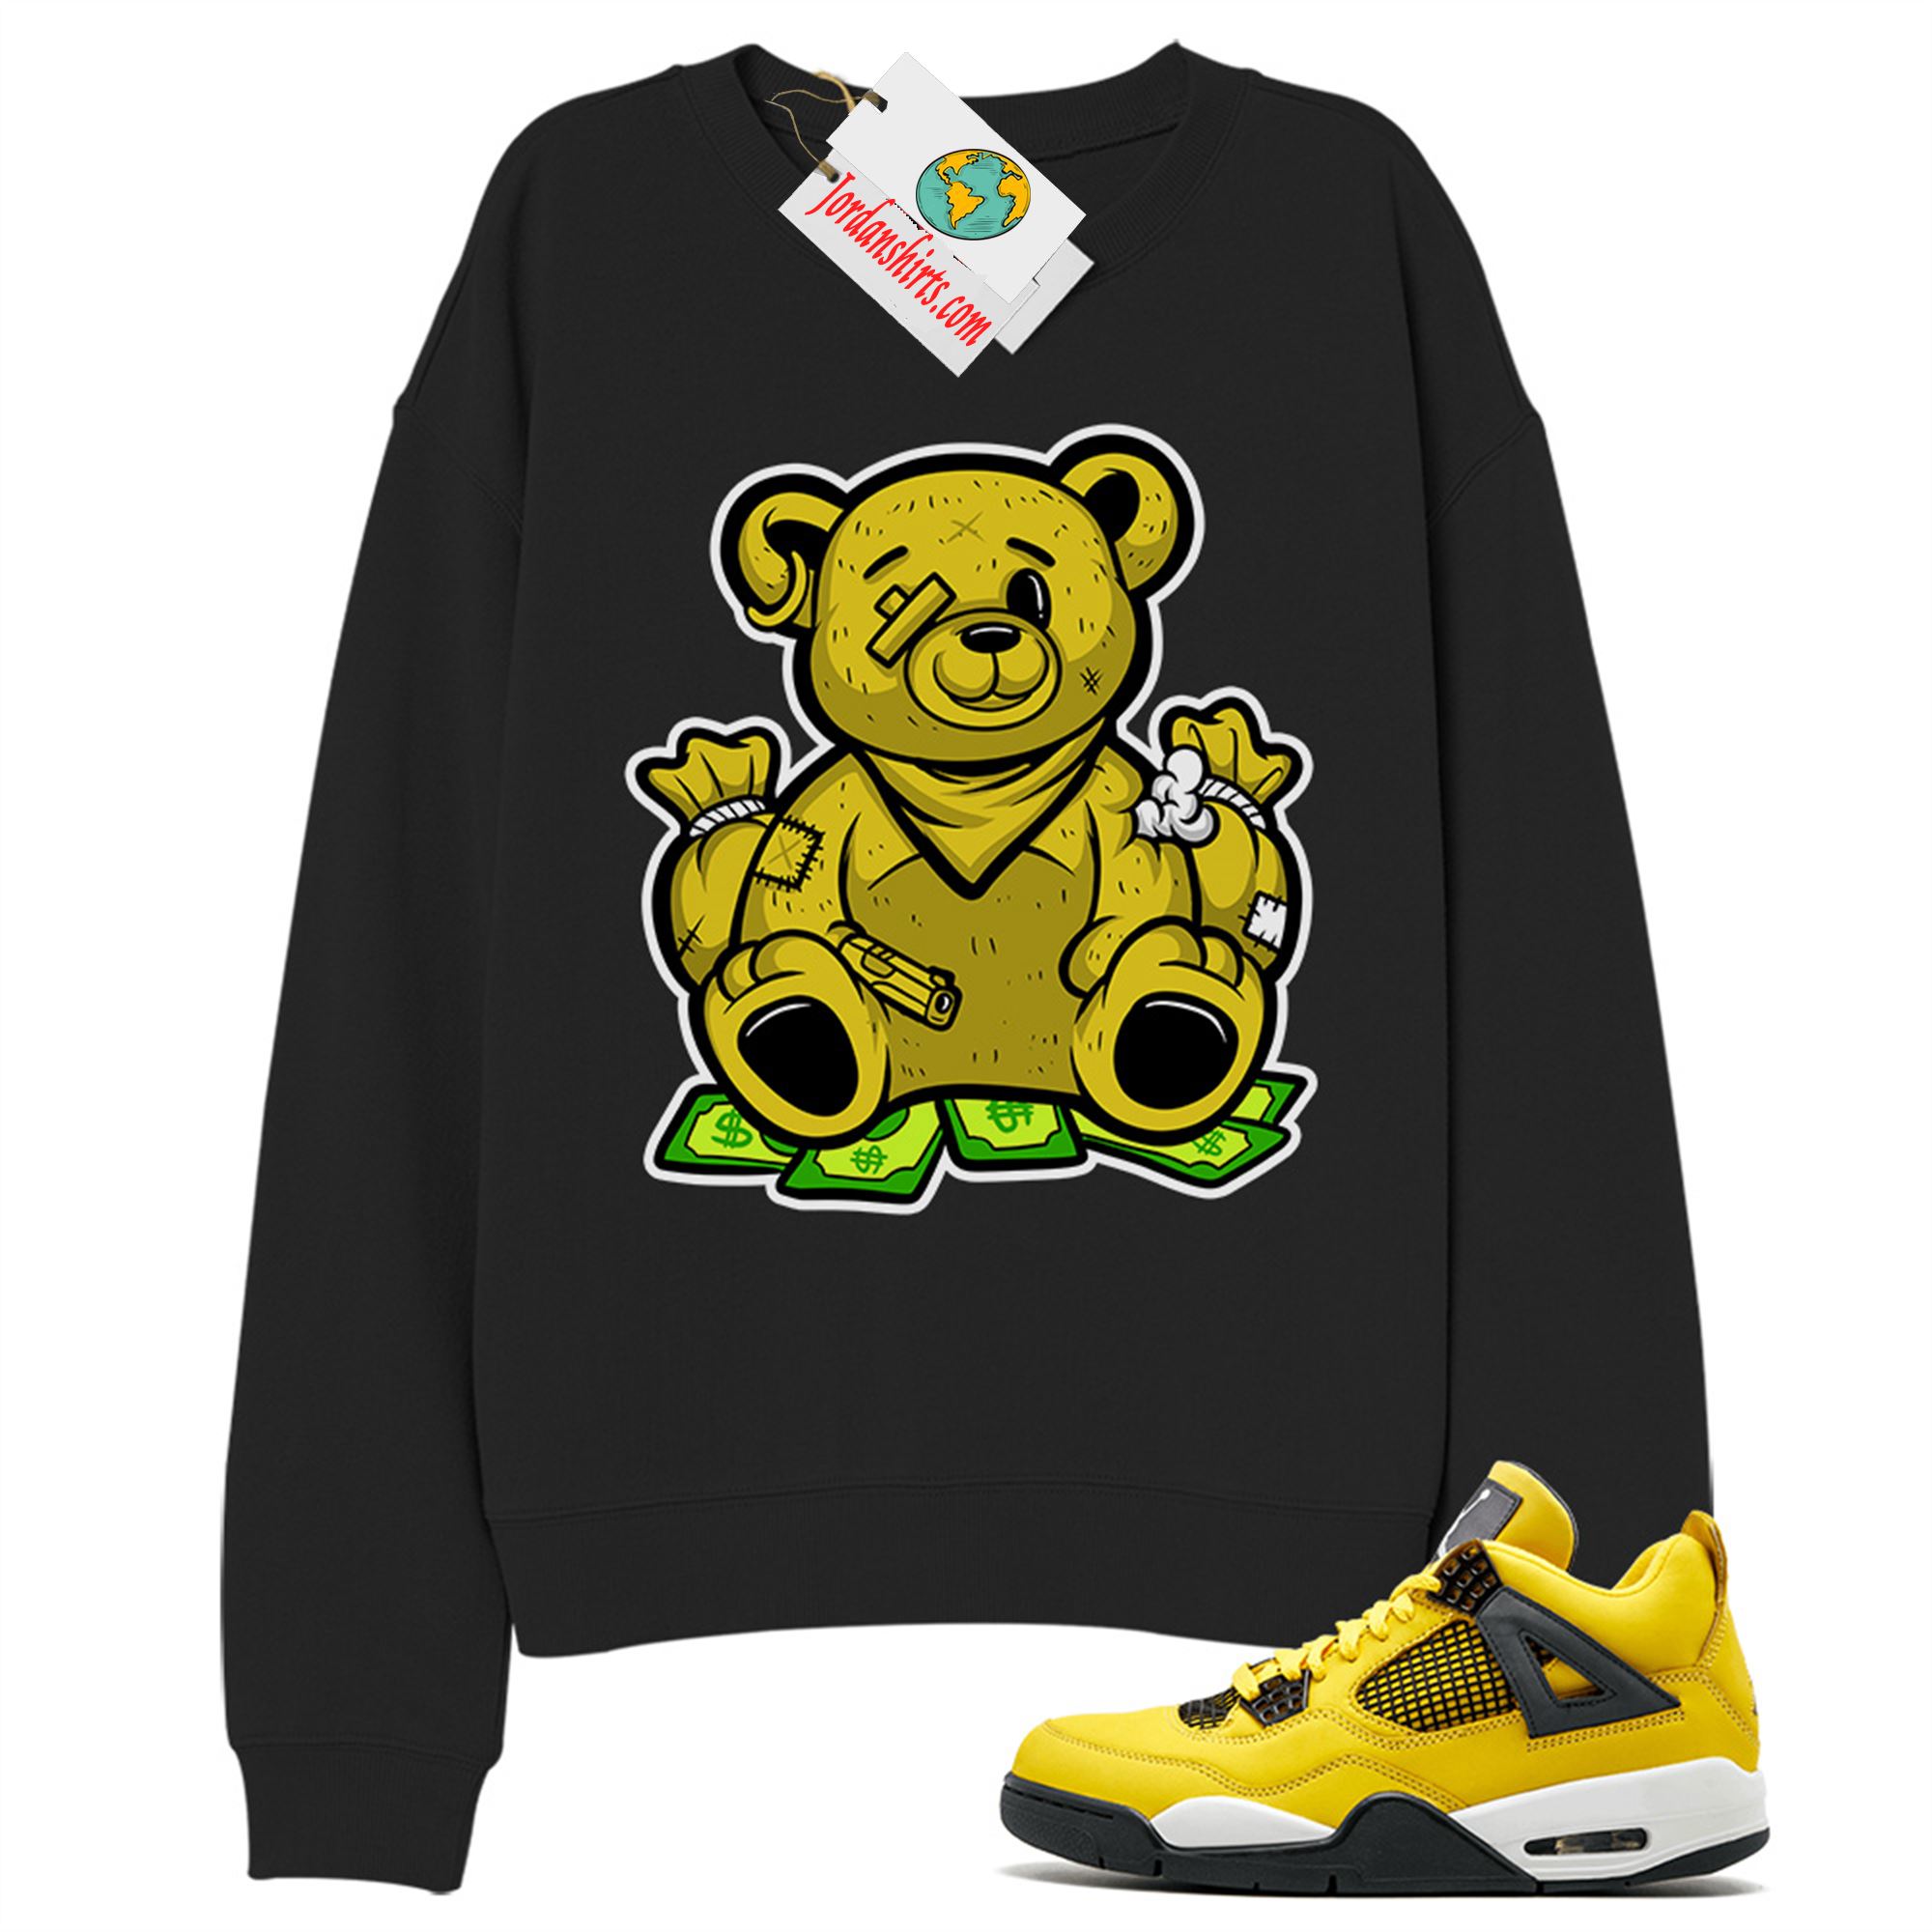 Jordan 4 Sweatshirt, Rich Teddy Bear Black Sweatshirt Air Jordan 4 Tour Yellowlightning 4s Plus Size Up To 5xl